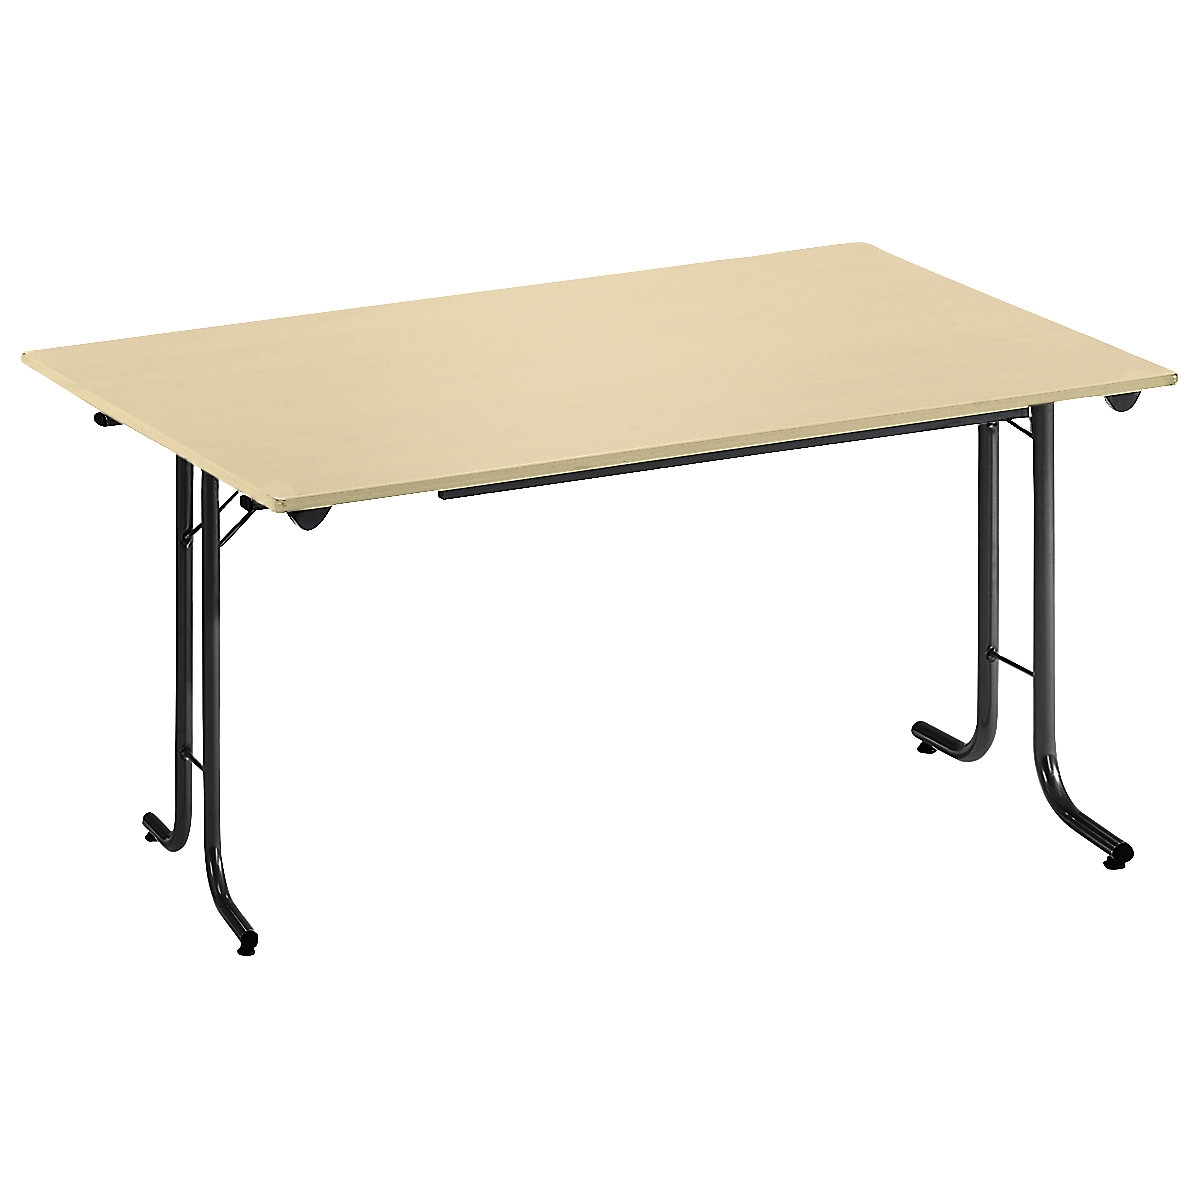 Folding table, with rounded edges, round tubular frame, rectangular top, 1200 x 700 mm, black frame, maple finish tabletop-16